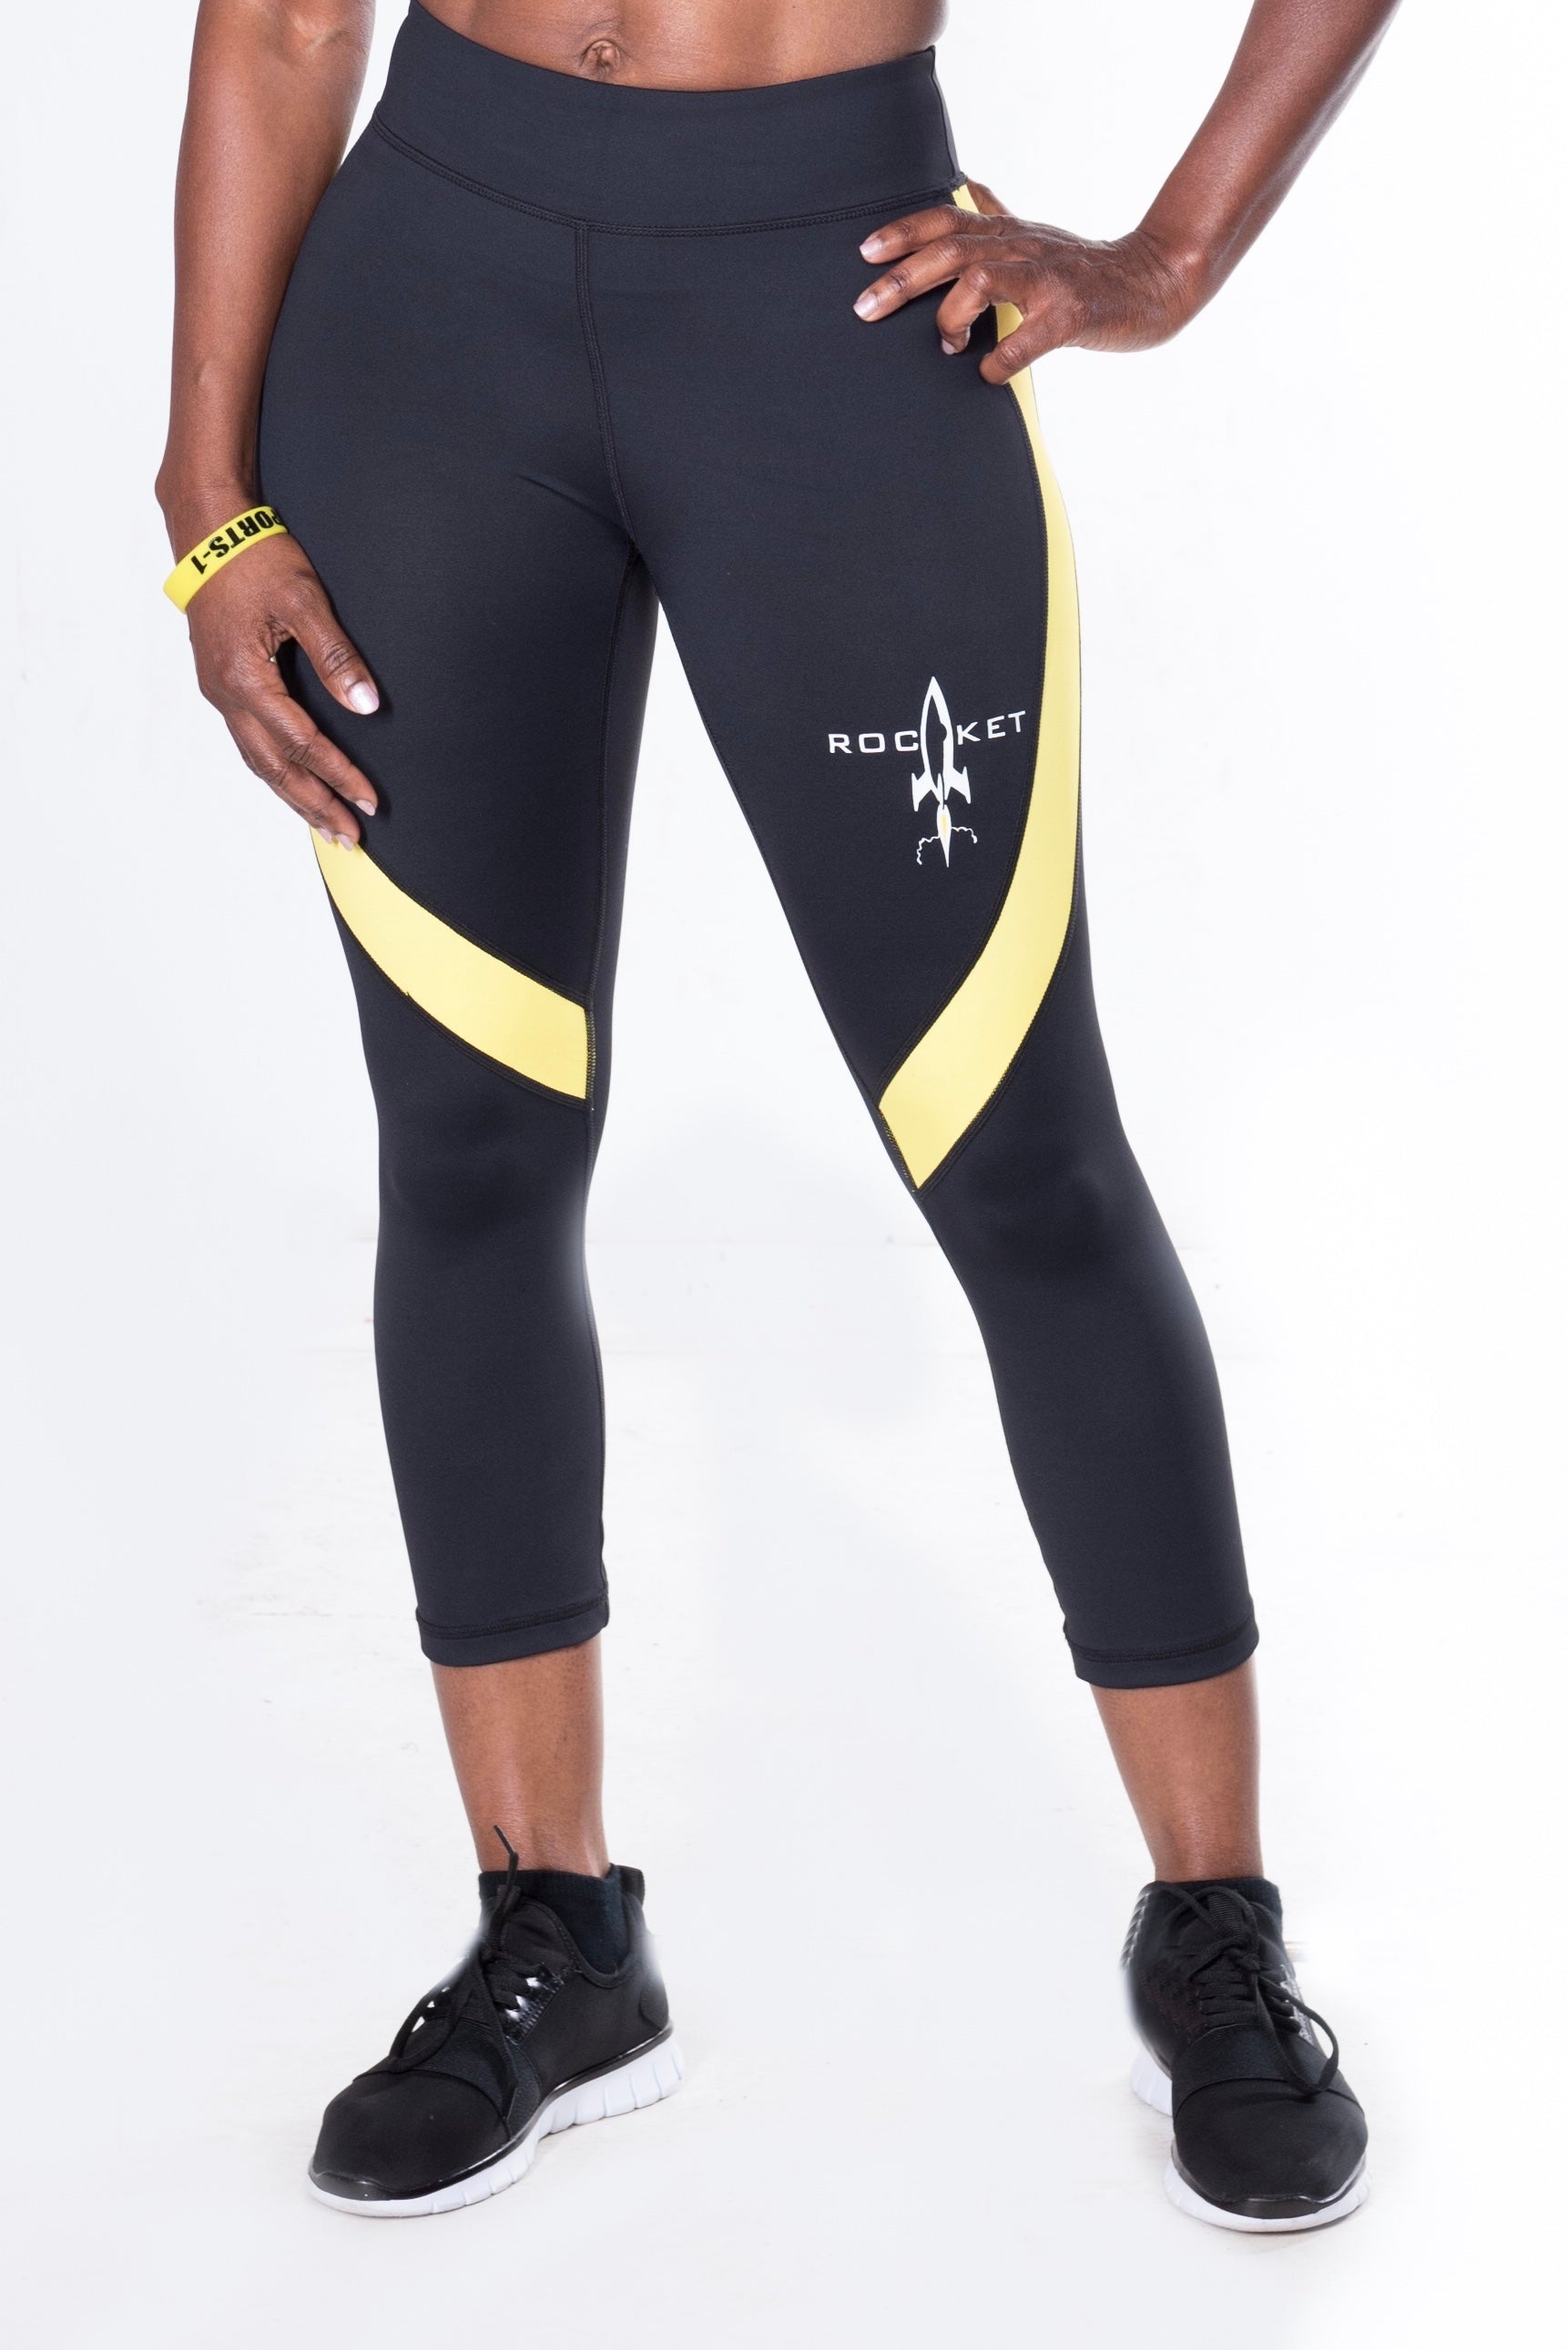 Women's Action Sport Capri Leggings (White Stripe, Yellow Stripe